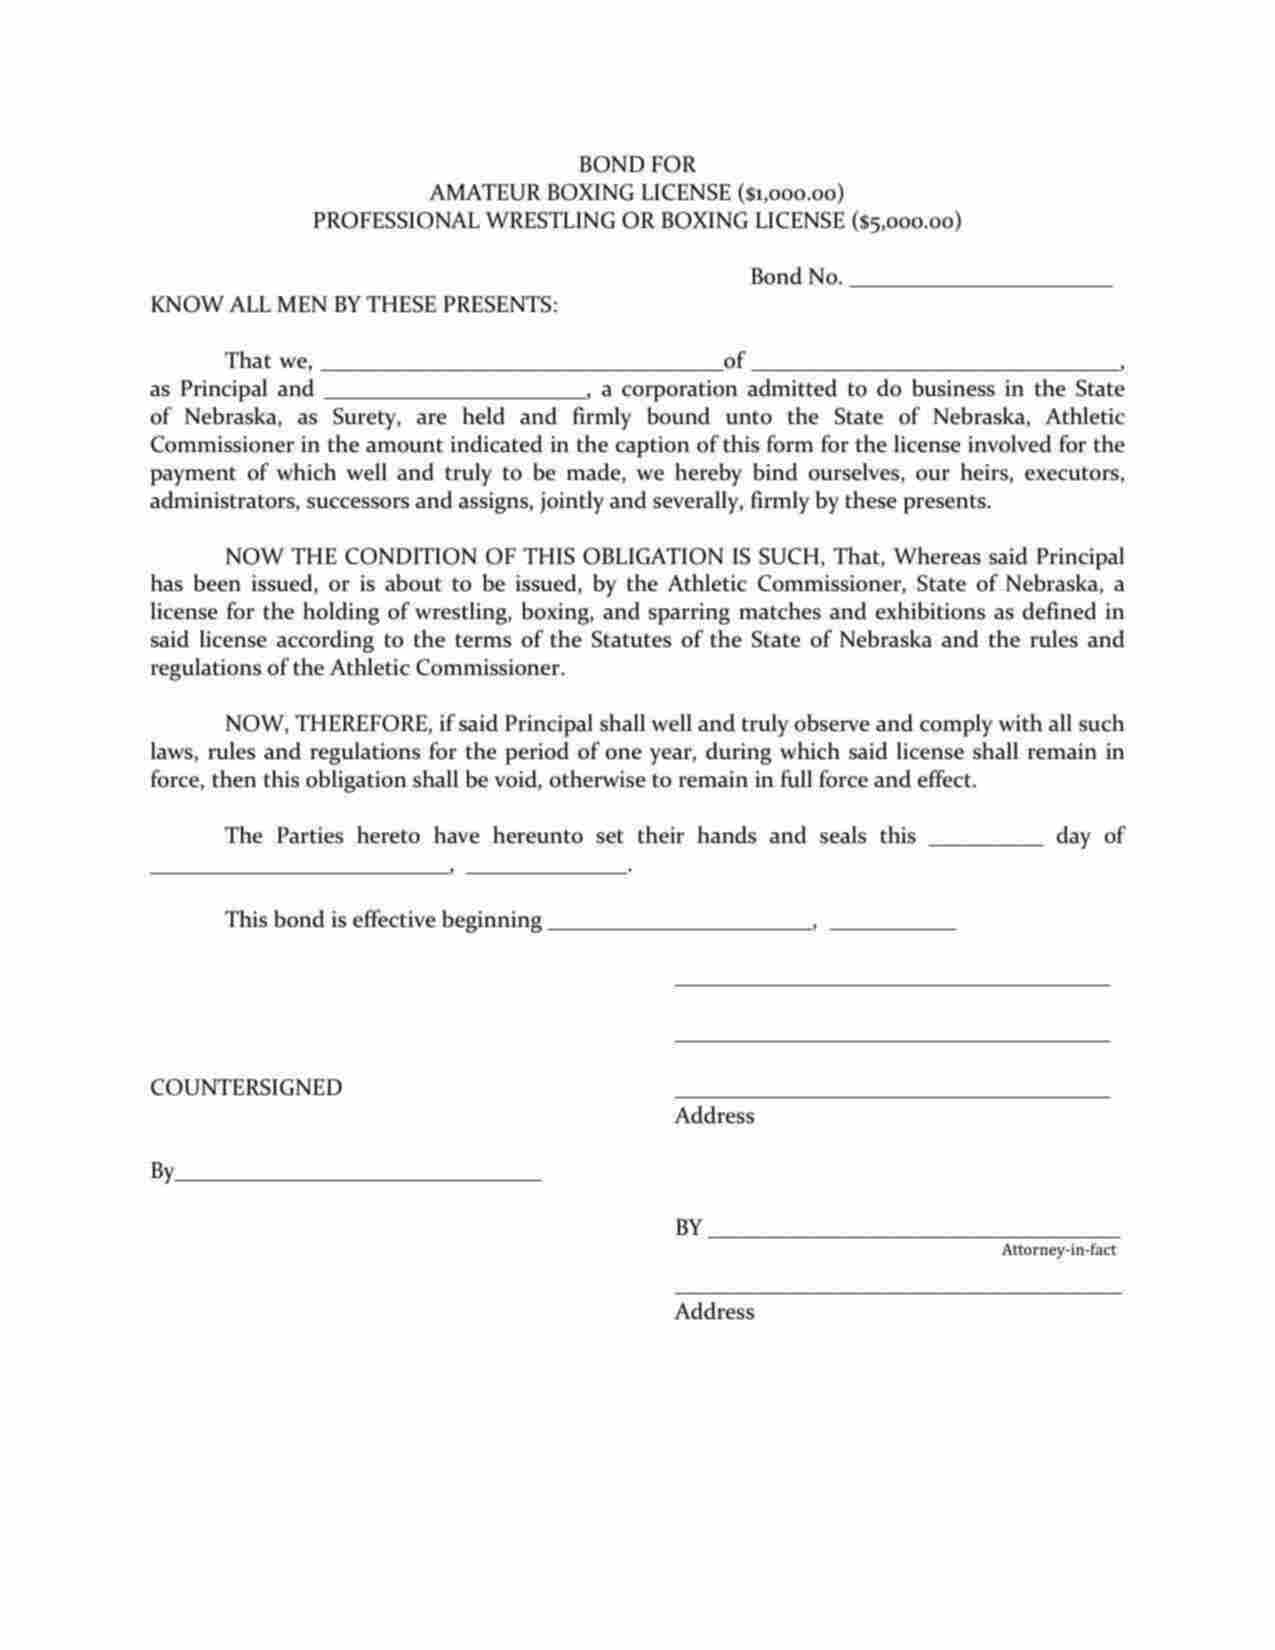 Nebraska Amateur Boxing License Bond Form